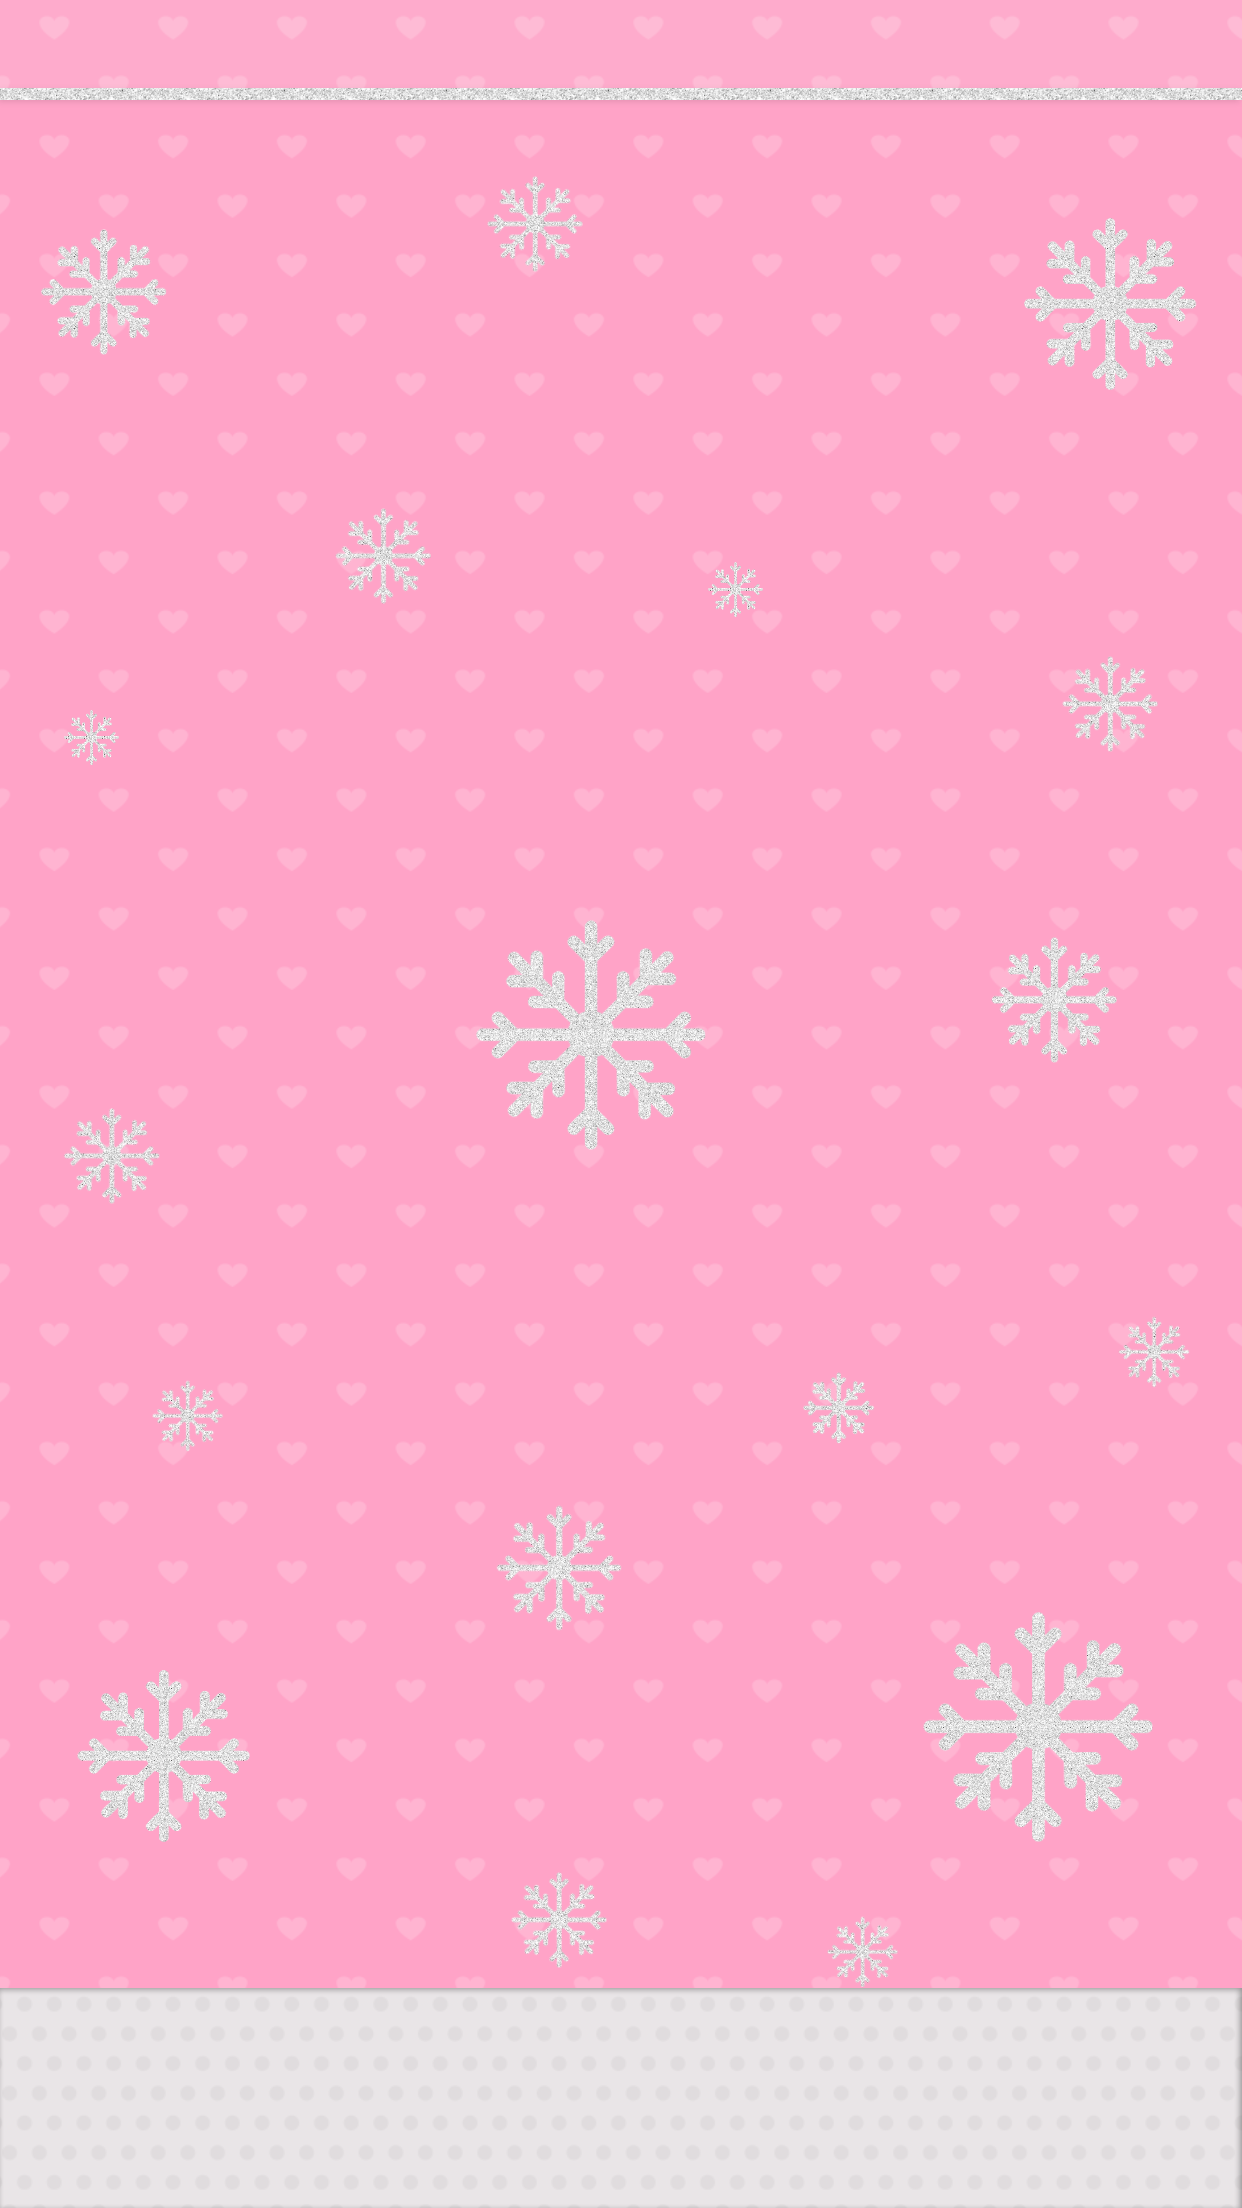 Cute Pink snowflakes christmas wallpaper. Wallpaper iphone christmas, Christmas wallpaper iphone cute, Wallpaper iphone cute